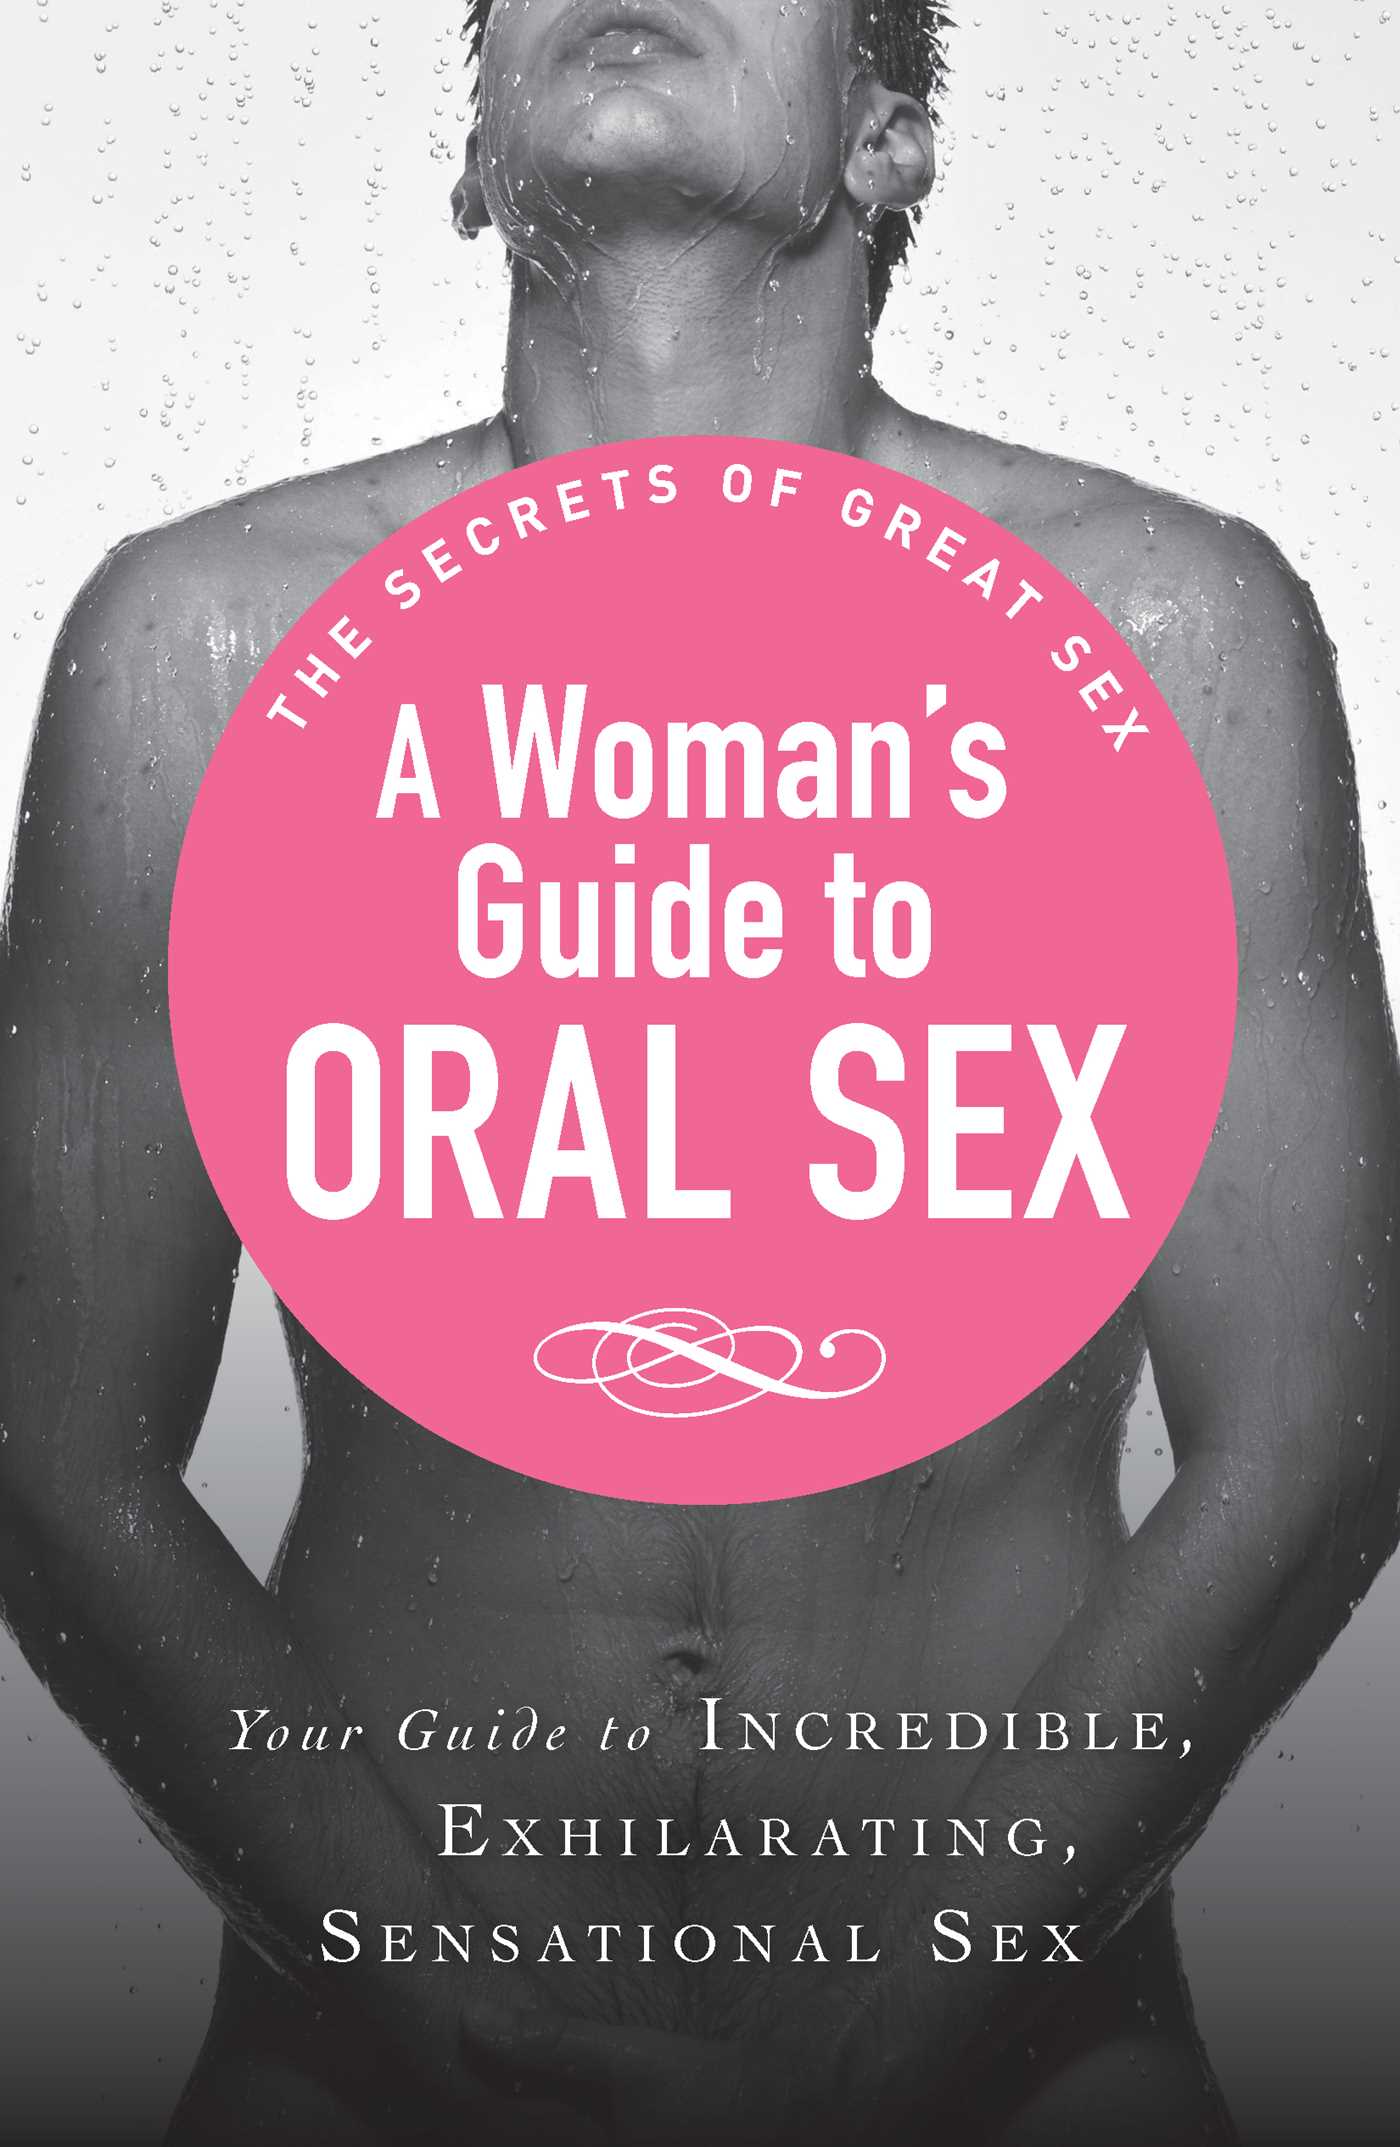 A Womans Guide to Oral Sex by Adams Media (ebook)